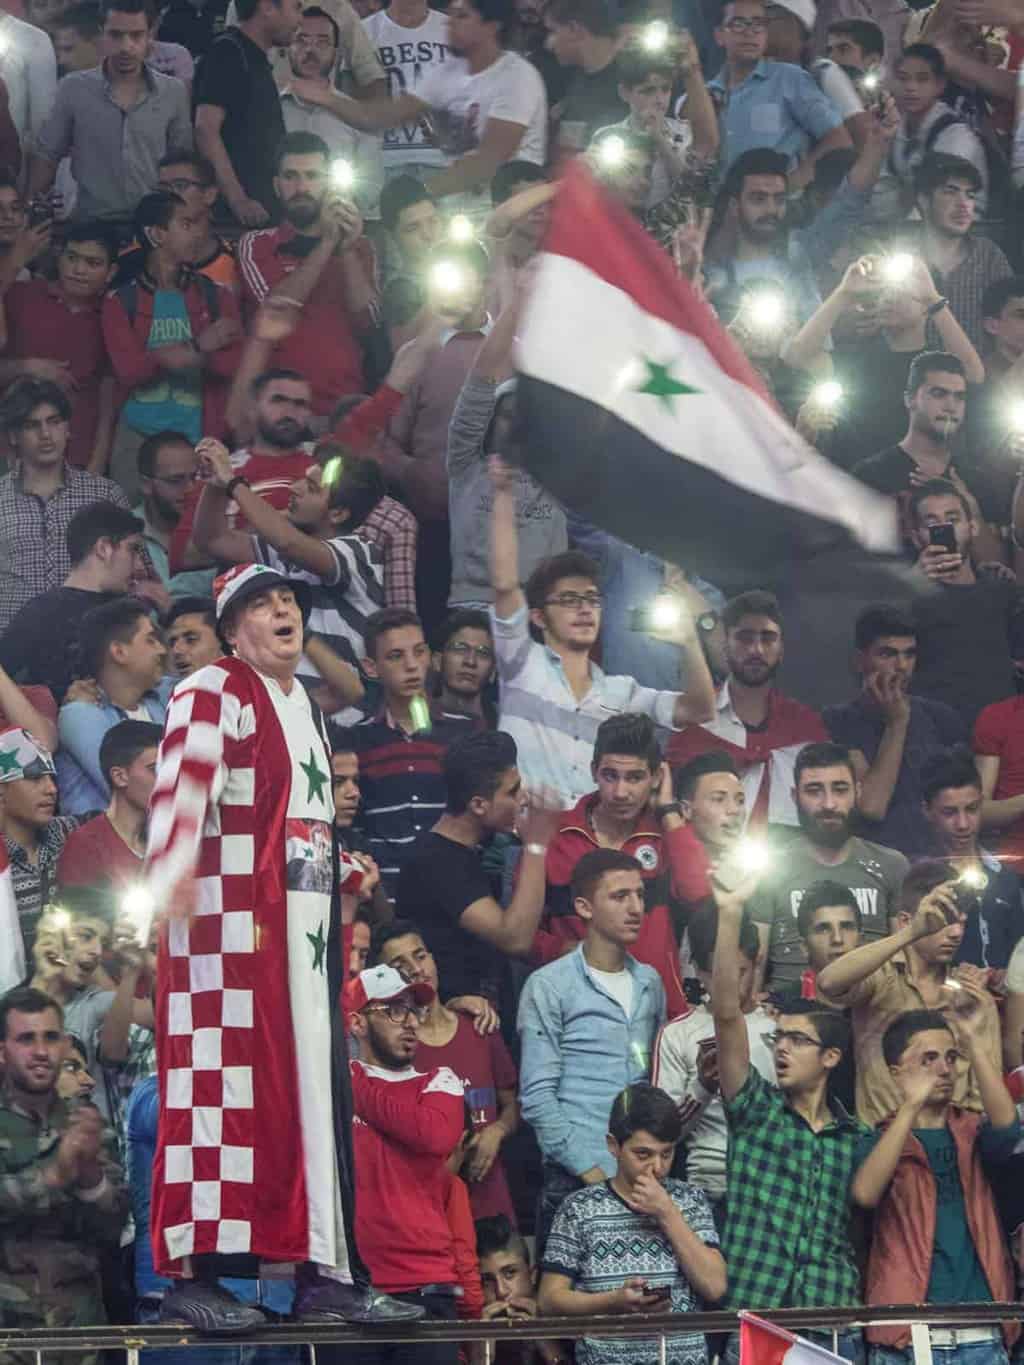 Syrian football fans